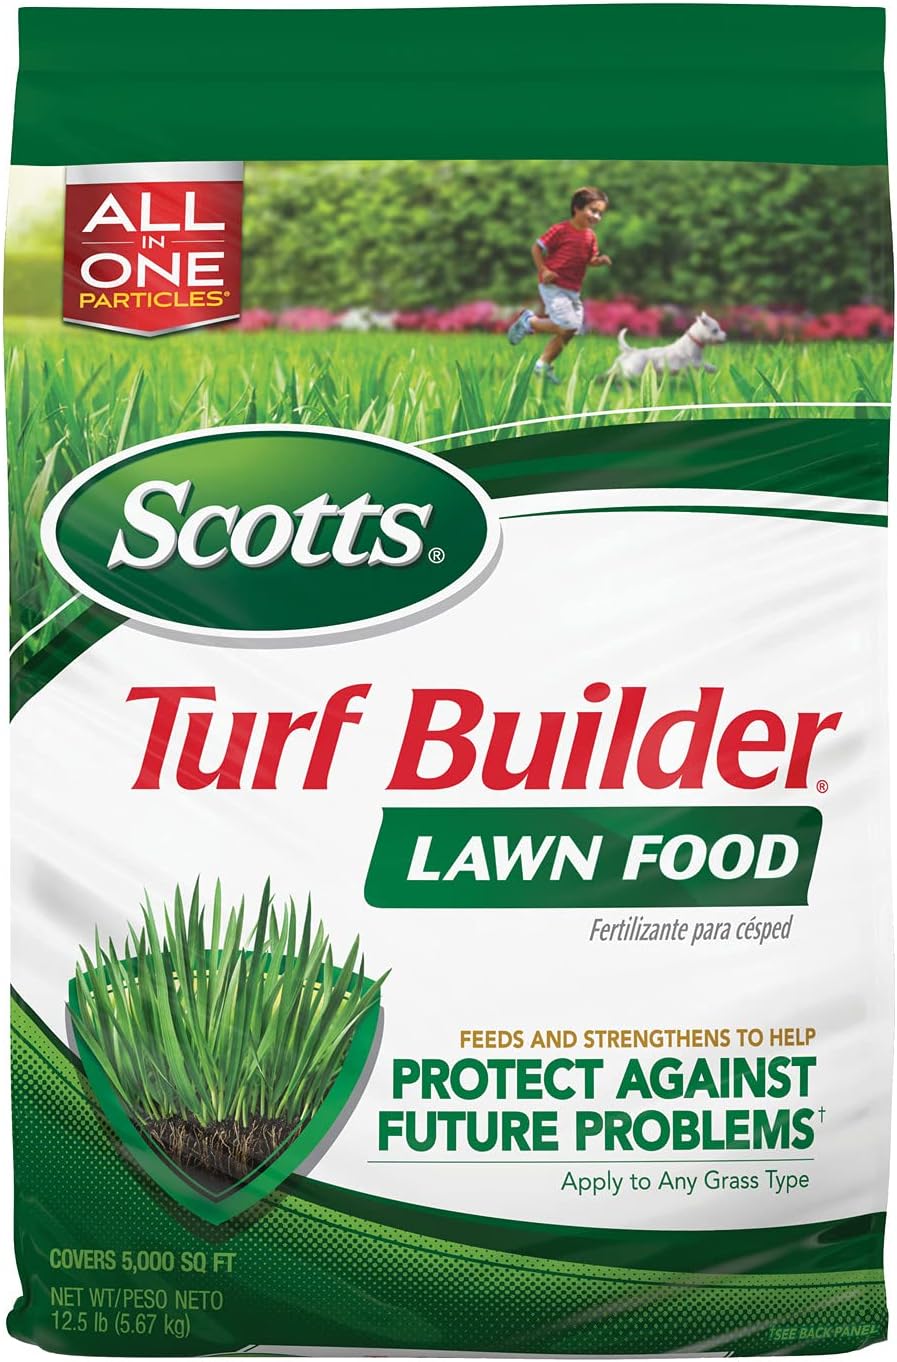 Scotts Turf Builder Lawn Food - Fertilizer for All [...]